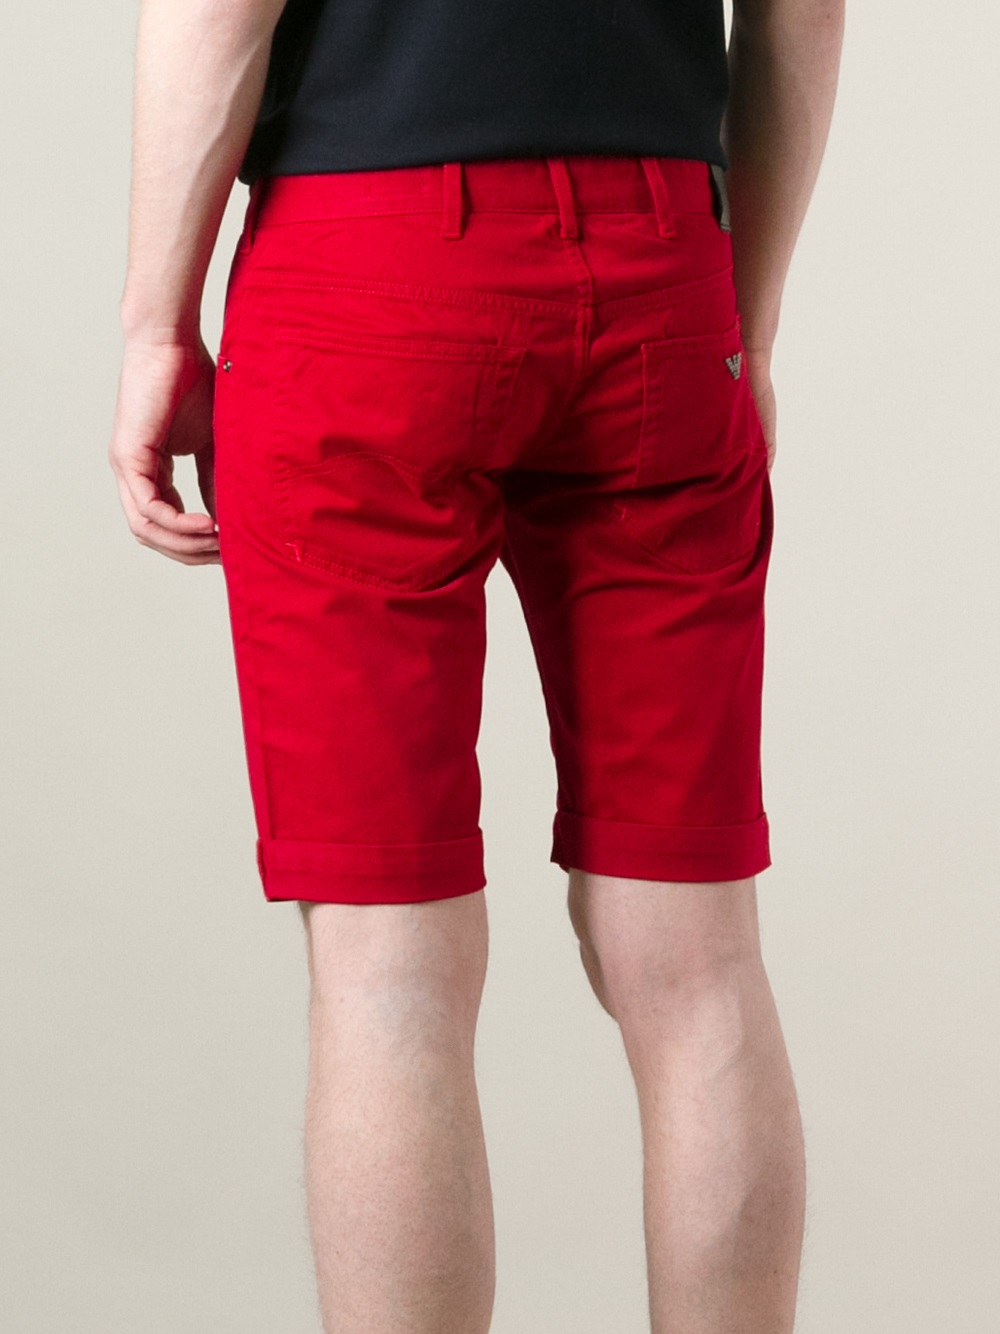 red denim shorts